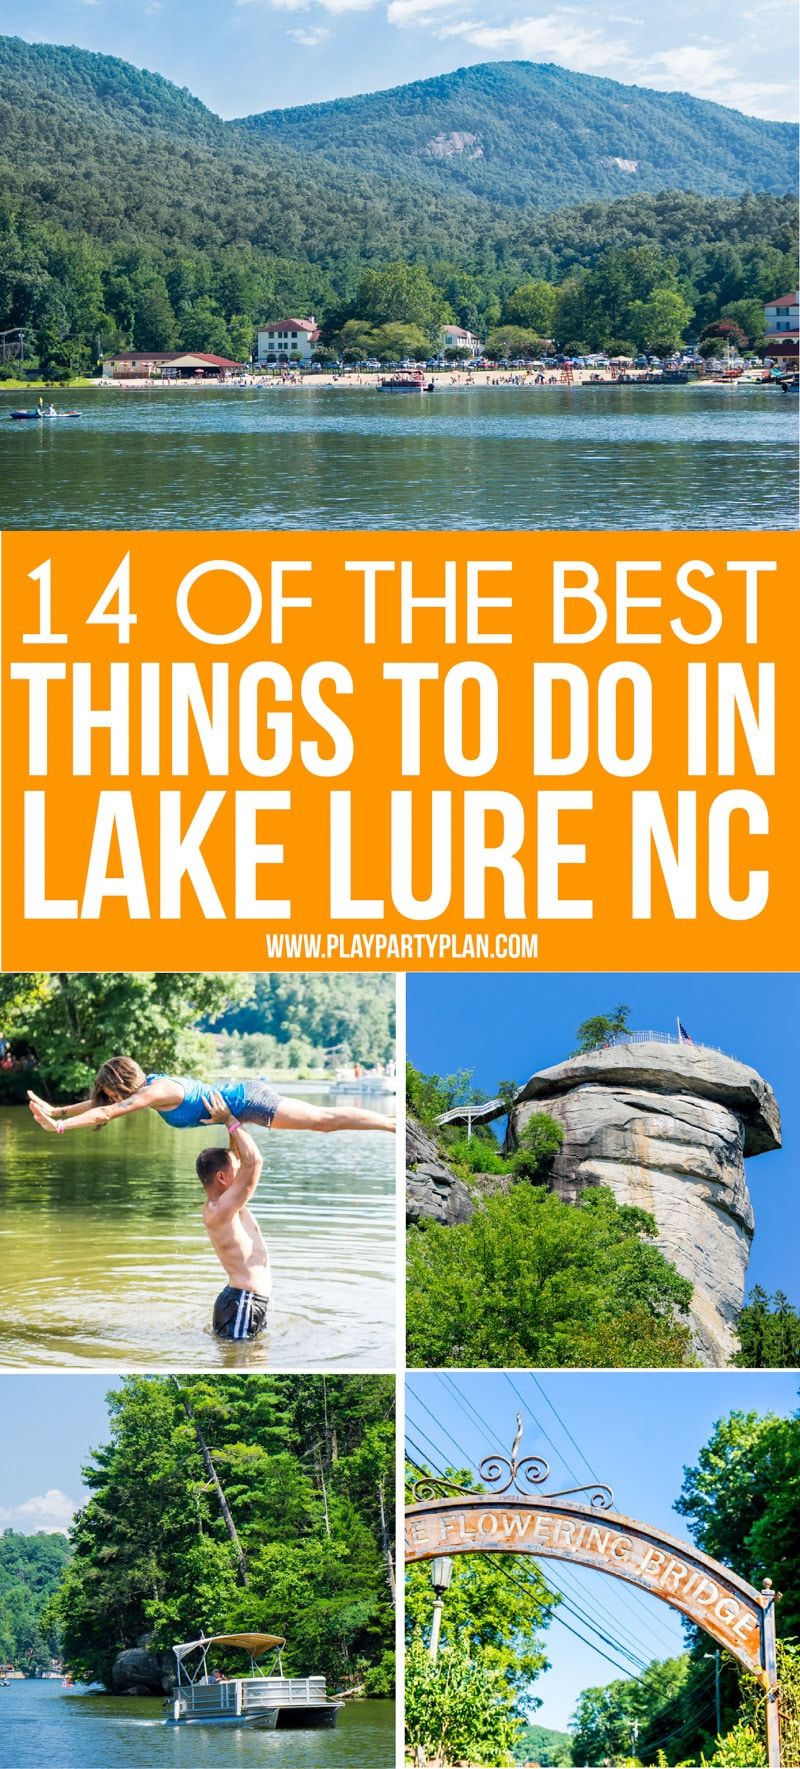 Una imatge collage de coses a fer a Lake Lure NC